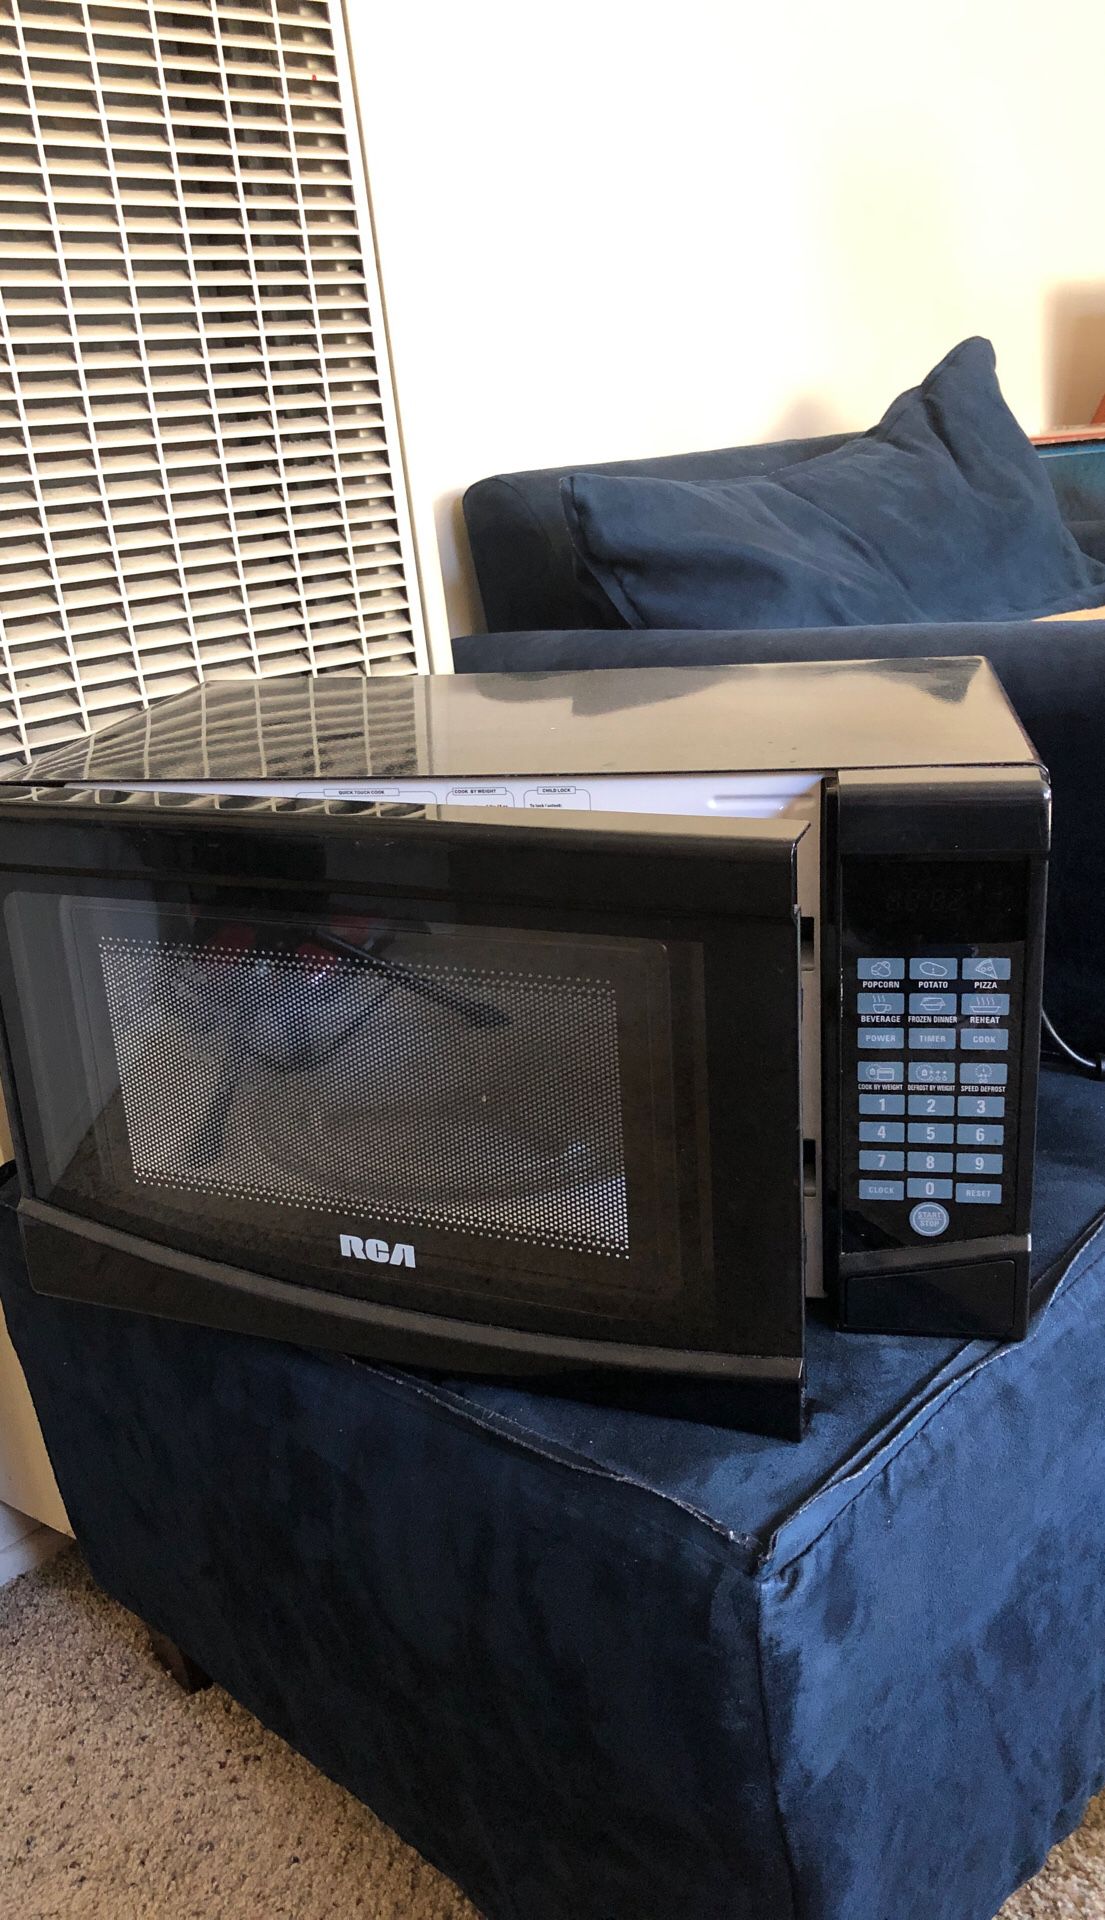 RCA microwave